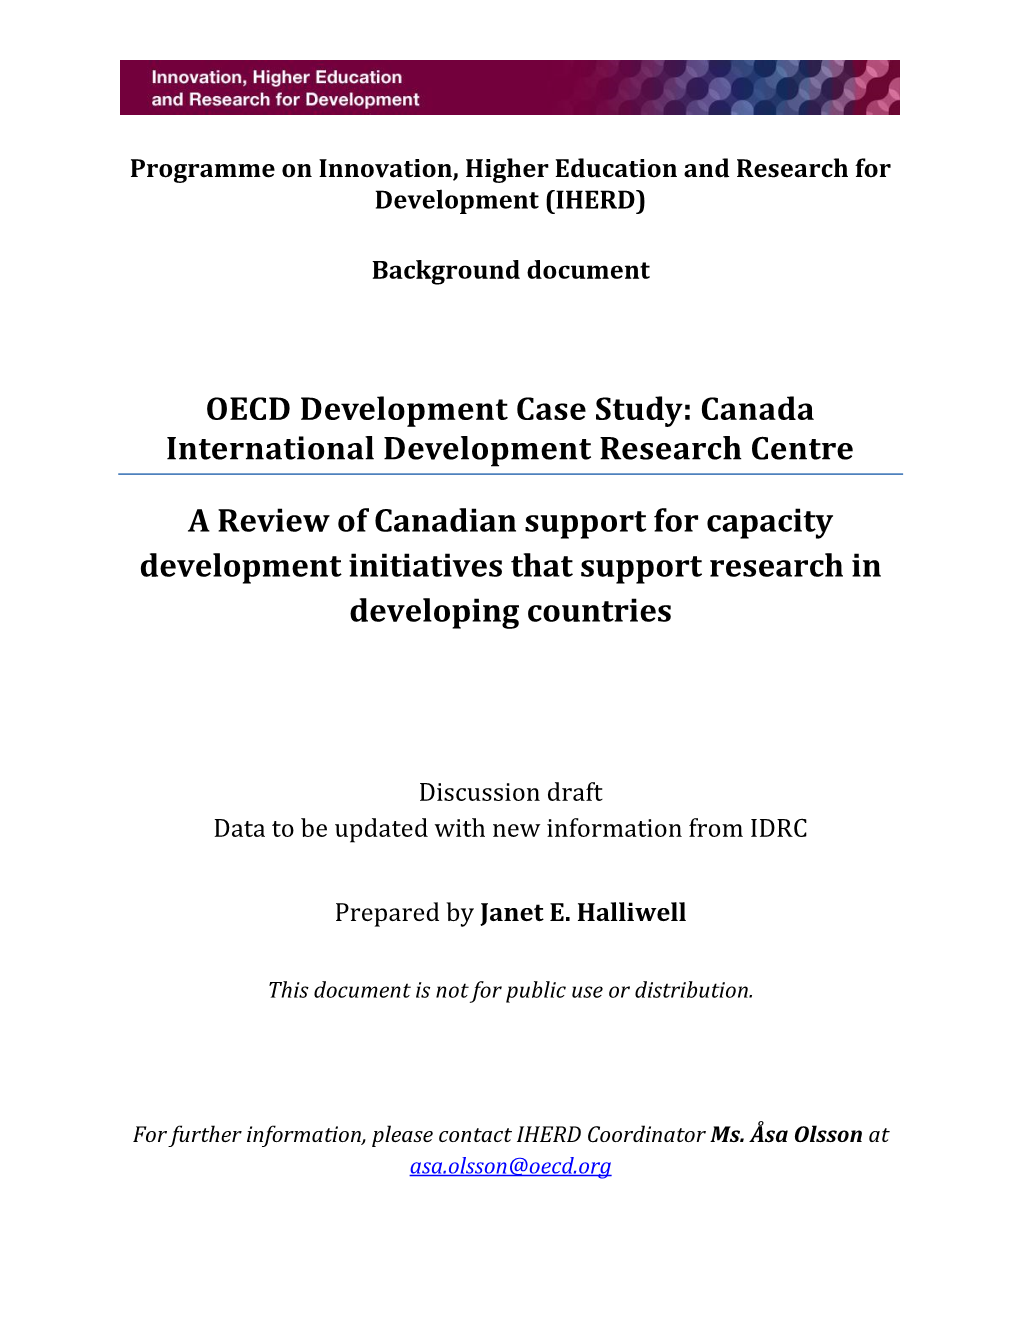 OECD Development Case Study: Canada International Development Research Centre